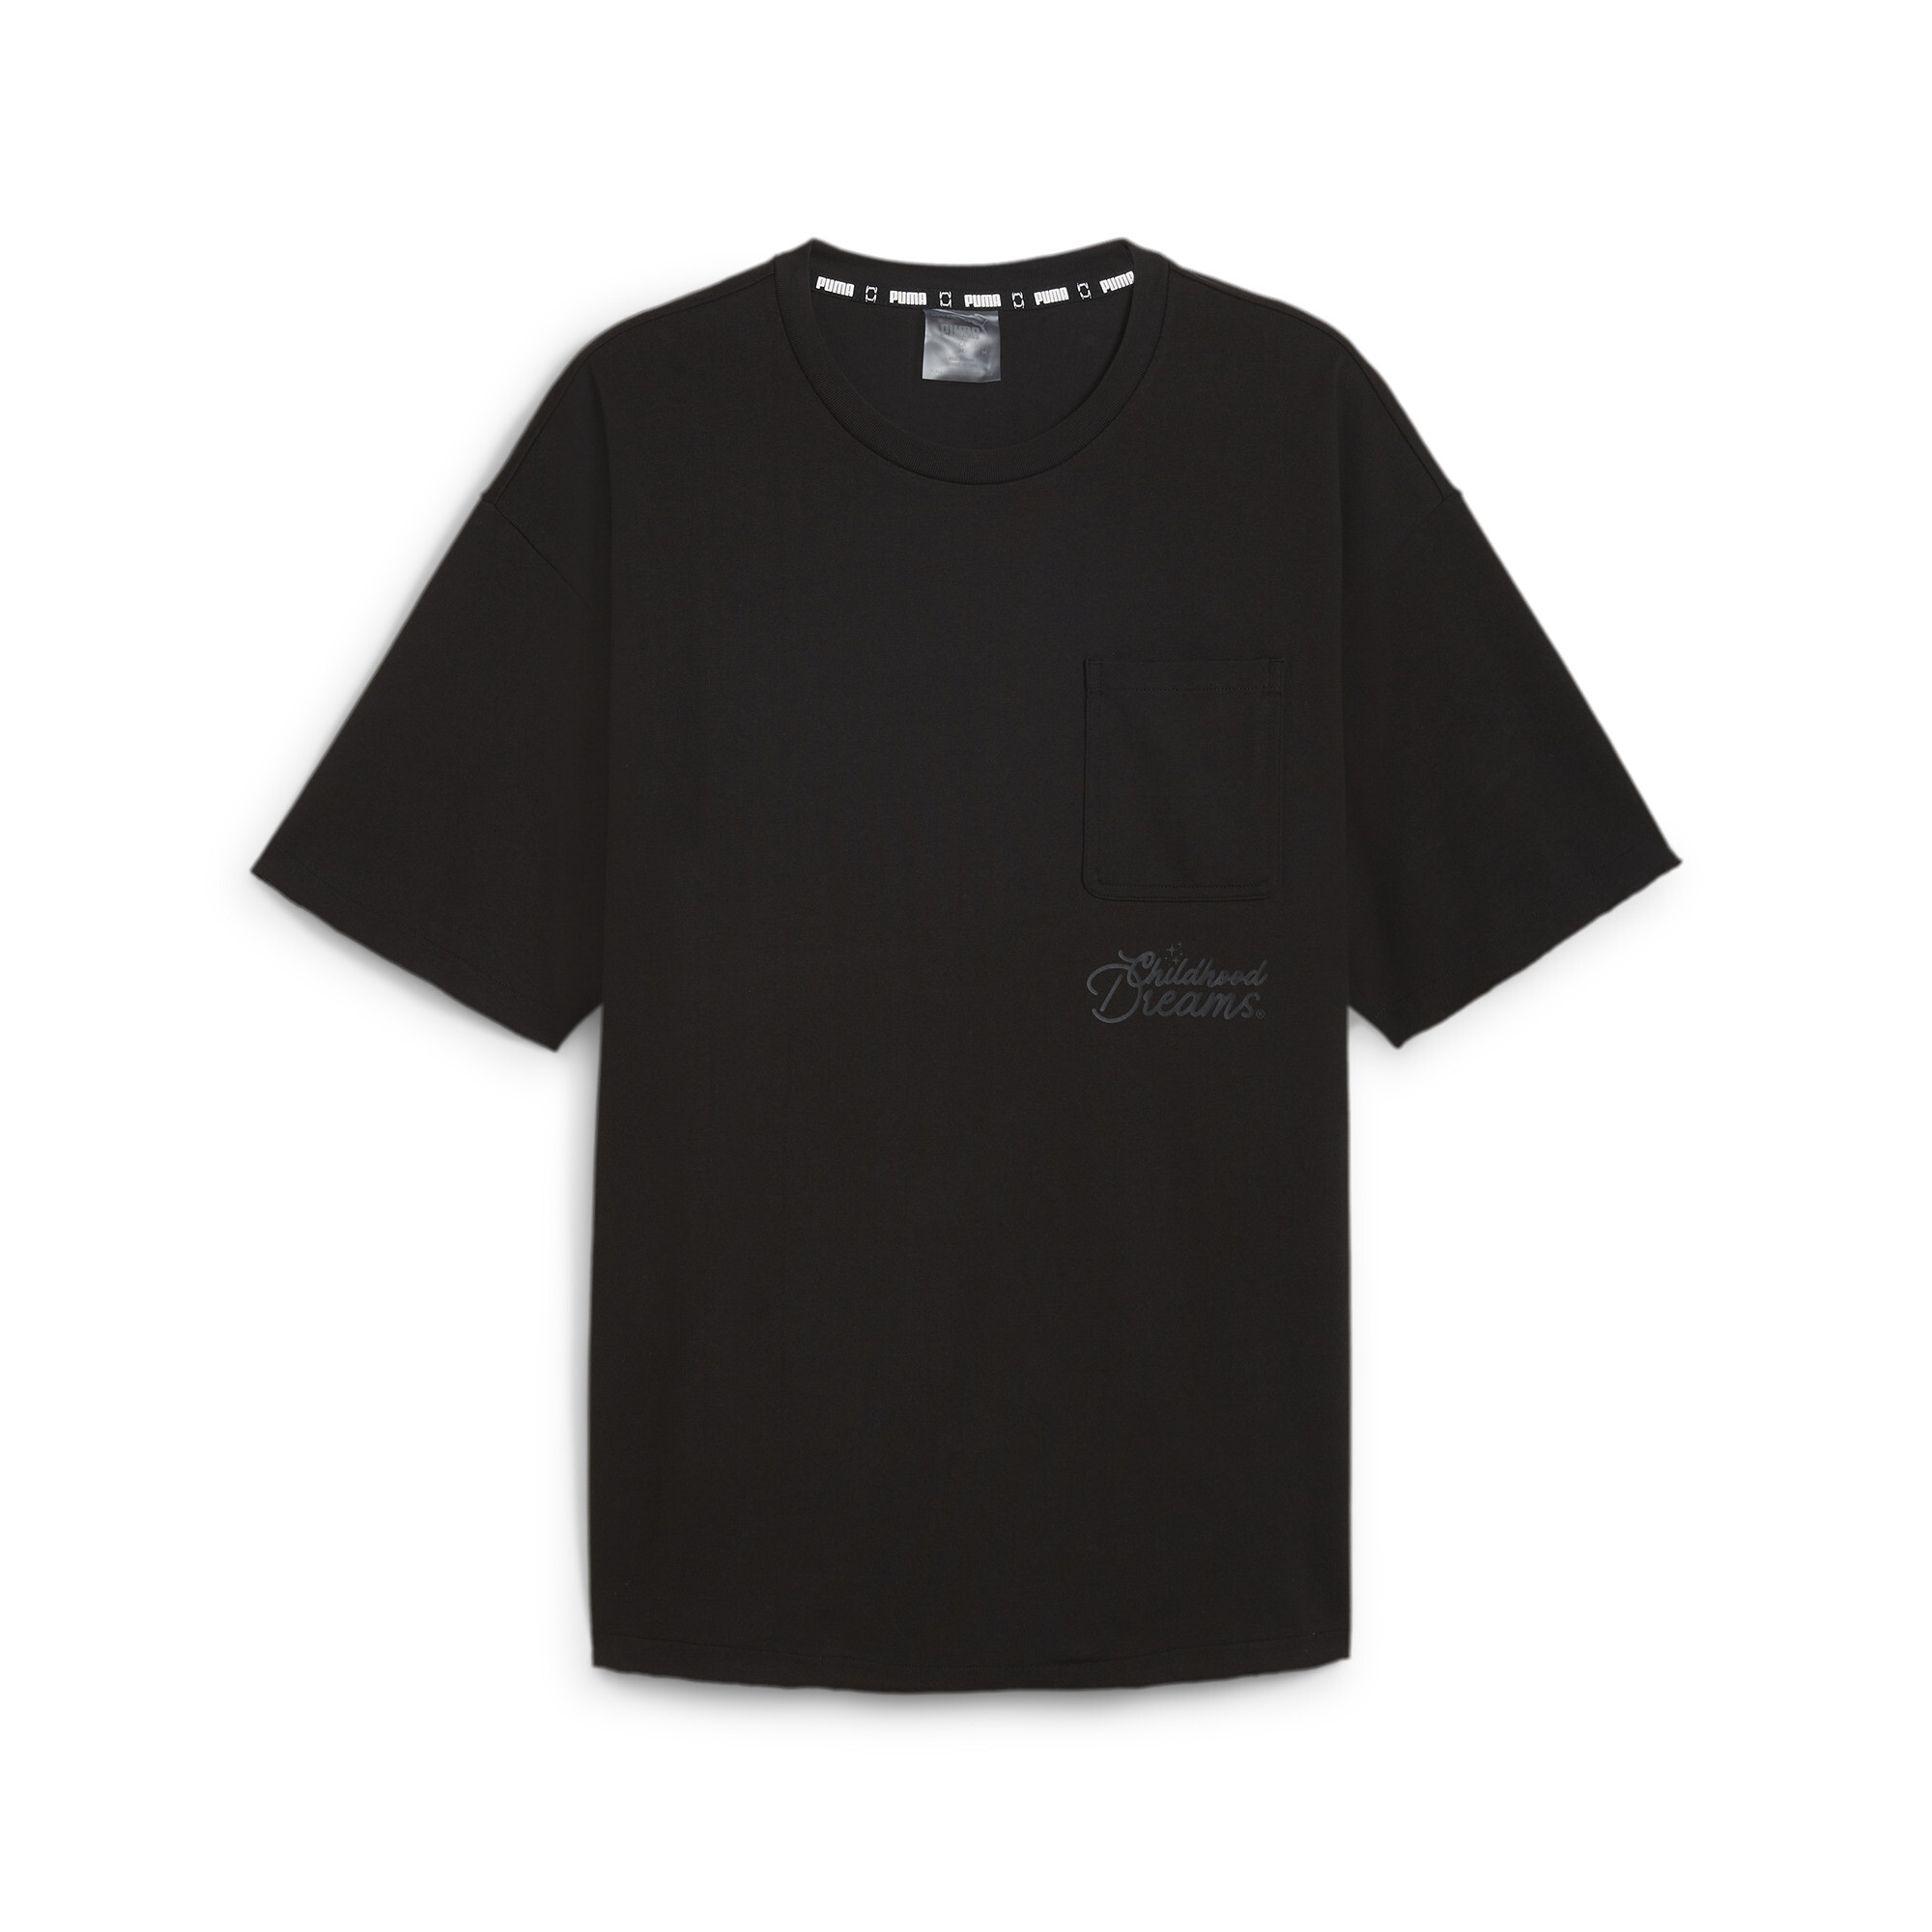 Men's PUMA X CHILDHOOD DREAMS Mesmerize Basketball T-Shirt In Black, Size XL